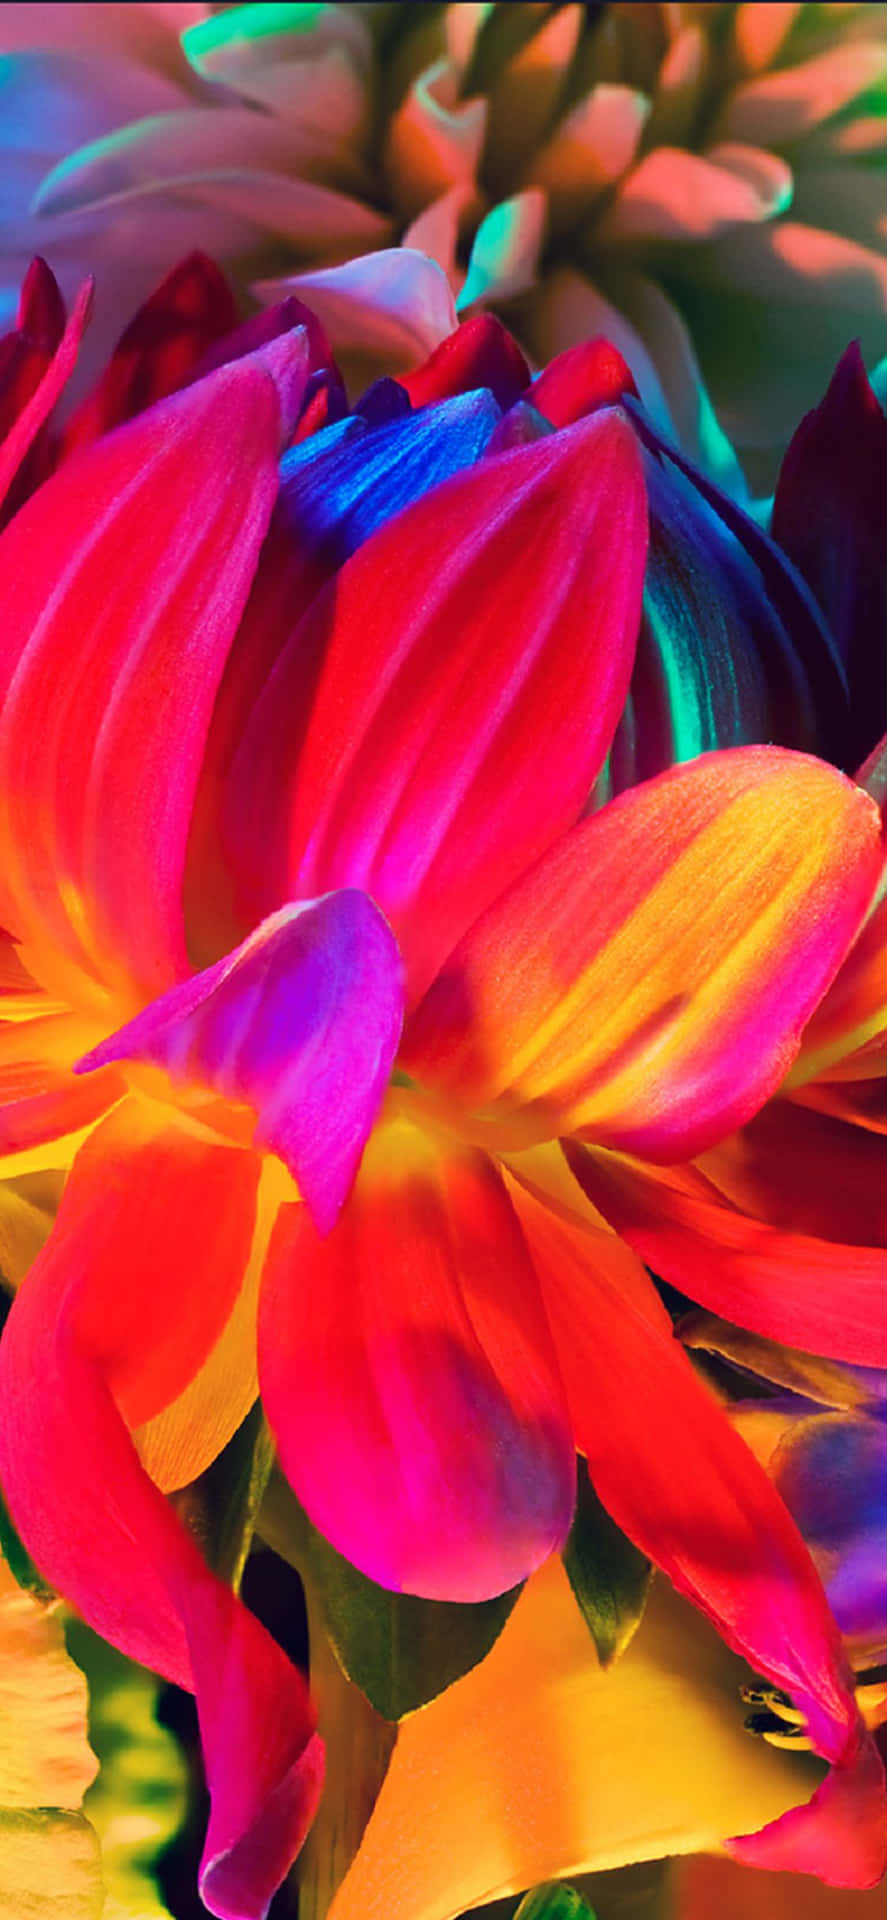 Enjoy a beautiful rainbow garden of flowers on your iPhone! Wallpaper